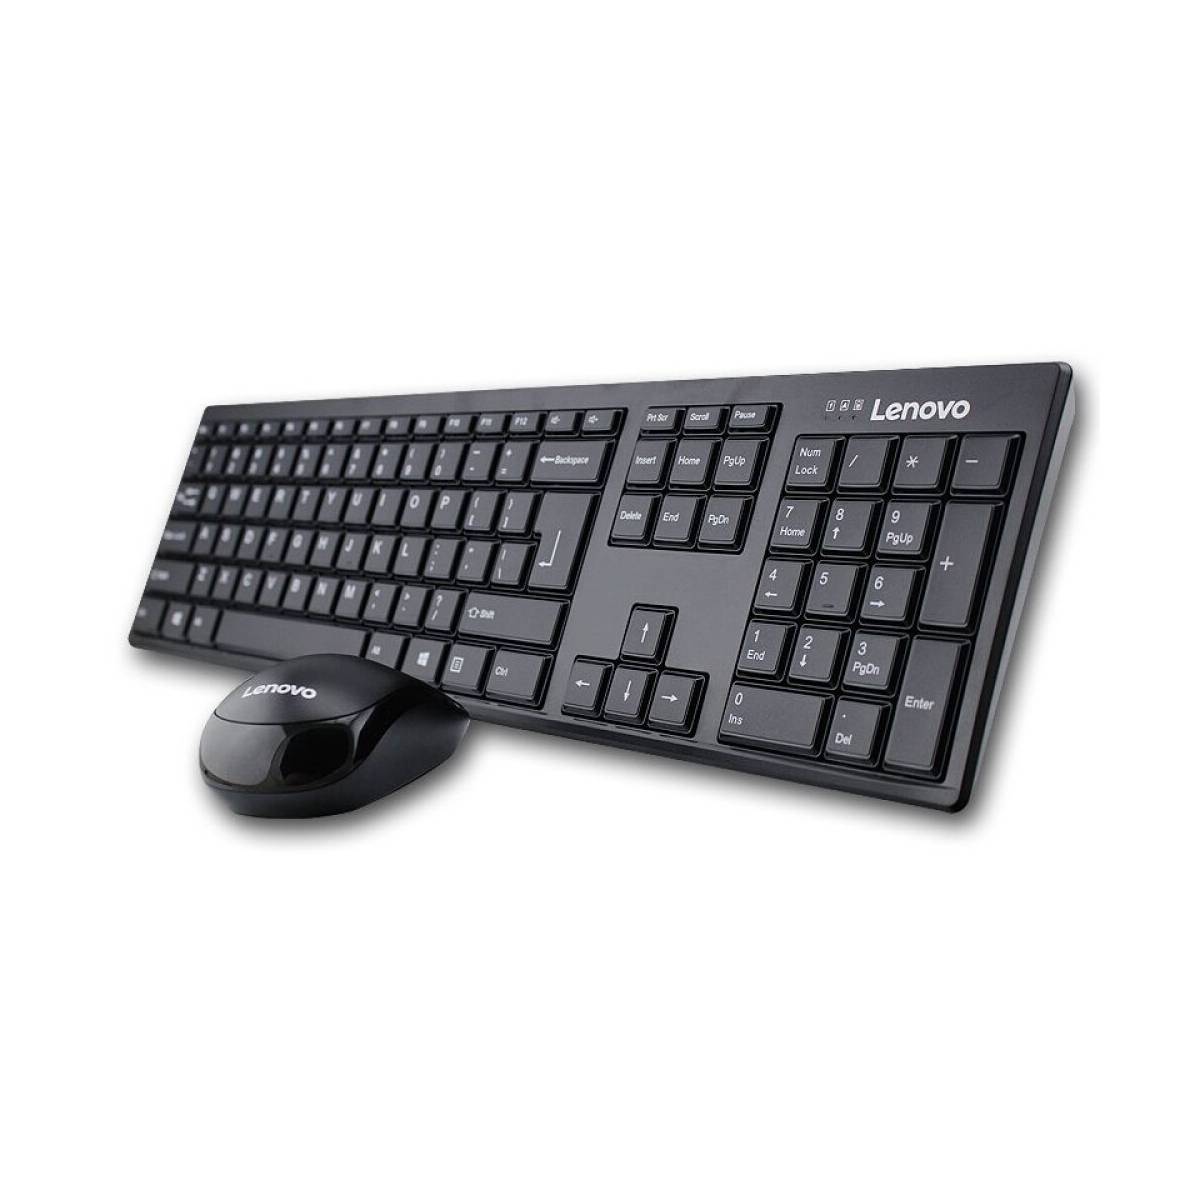 Lenovo 100 Wireless Keyboard & Mouse Combo